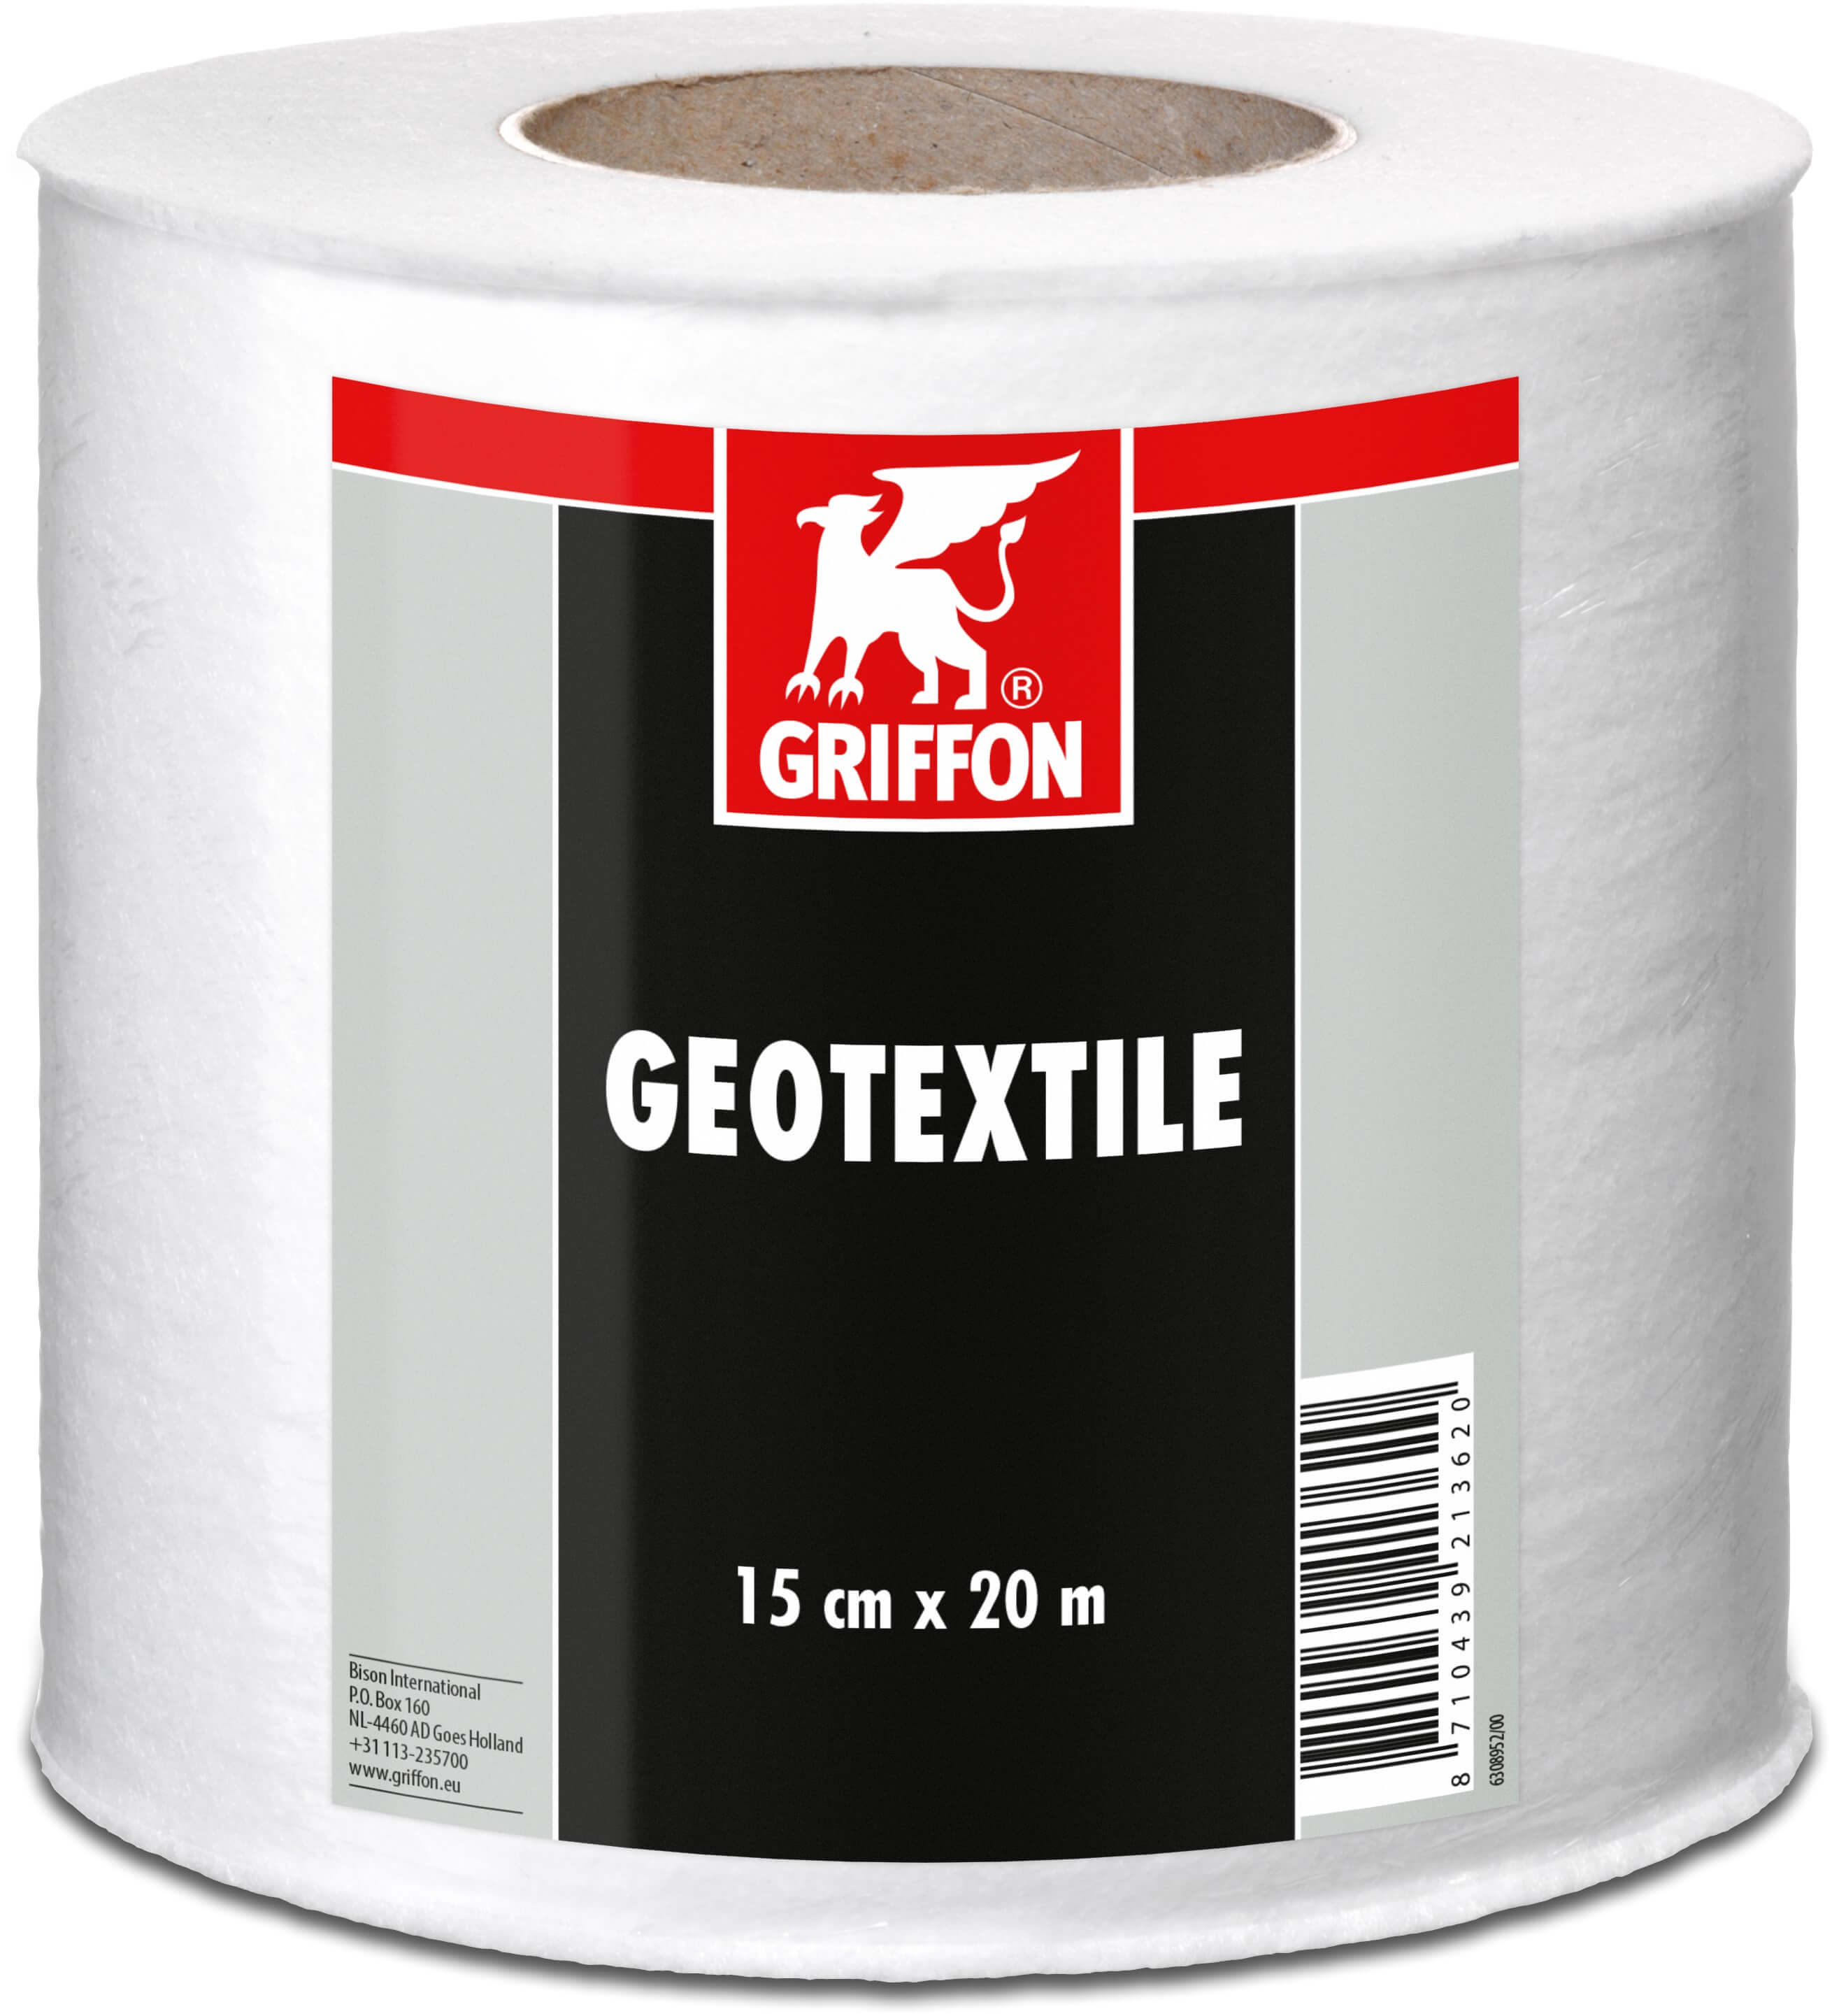 Griffon Geotextile 20m type Geotextile 150 mm